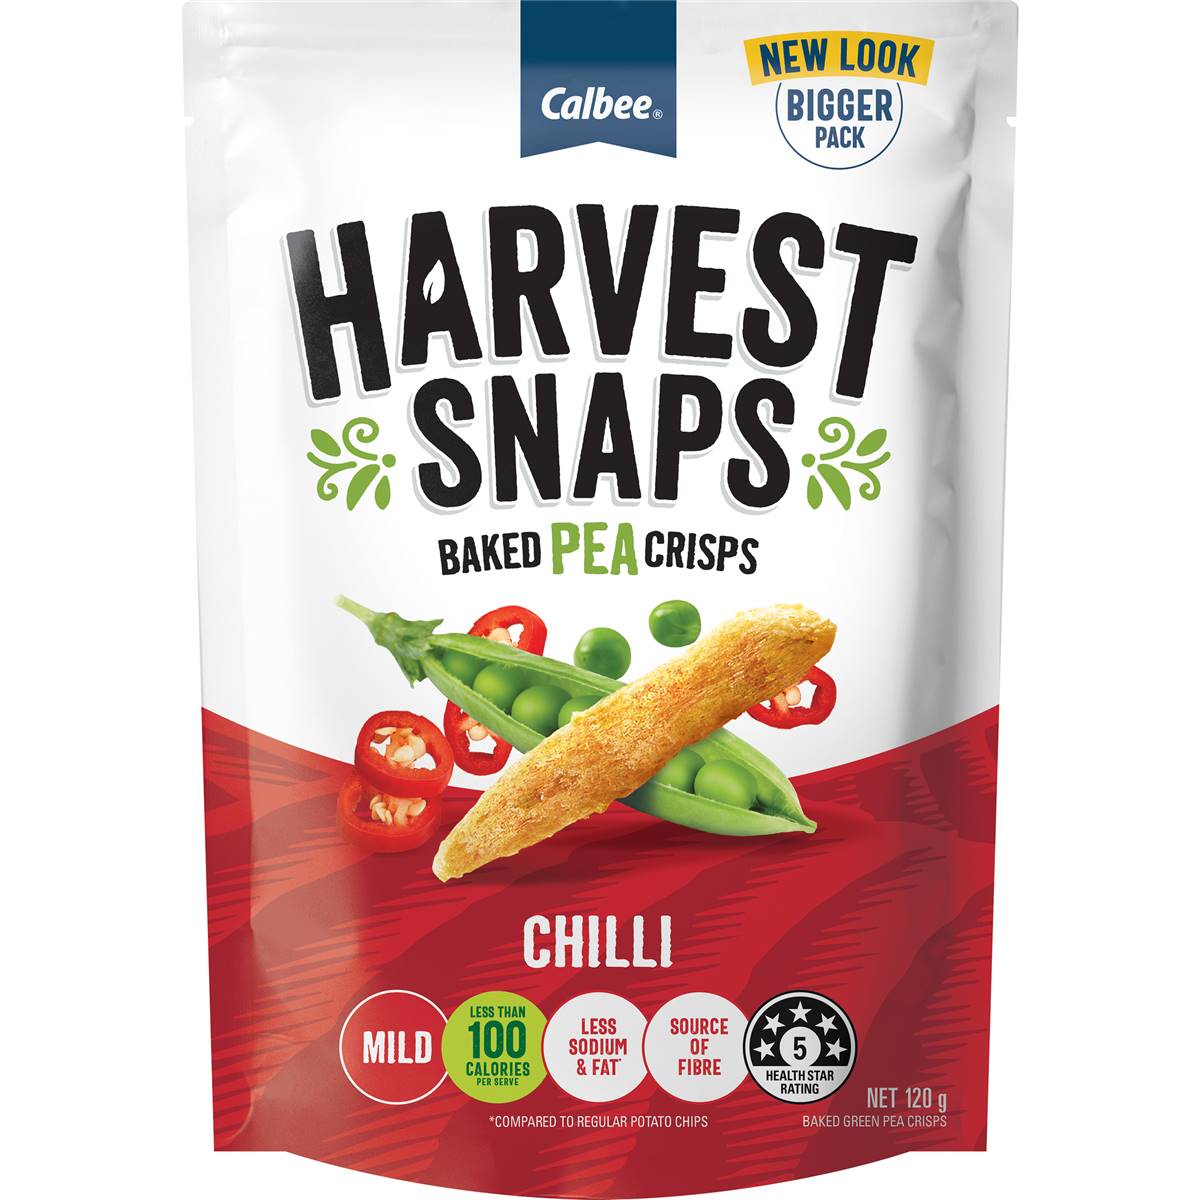 Calbee Harvest Snaps Baked Pea Crisps Chilli 120g